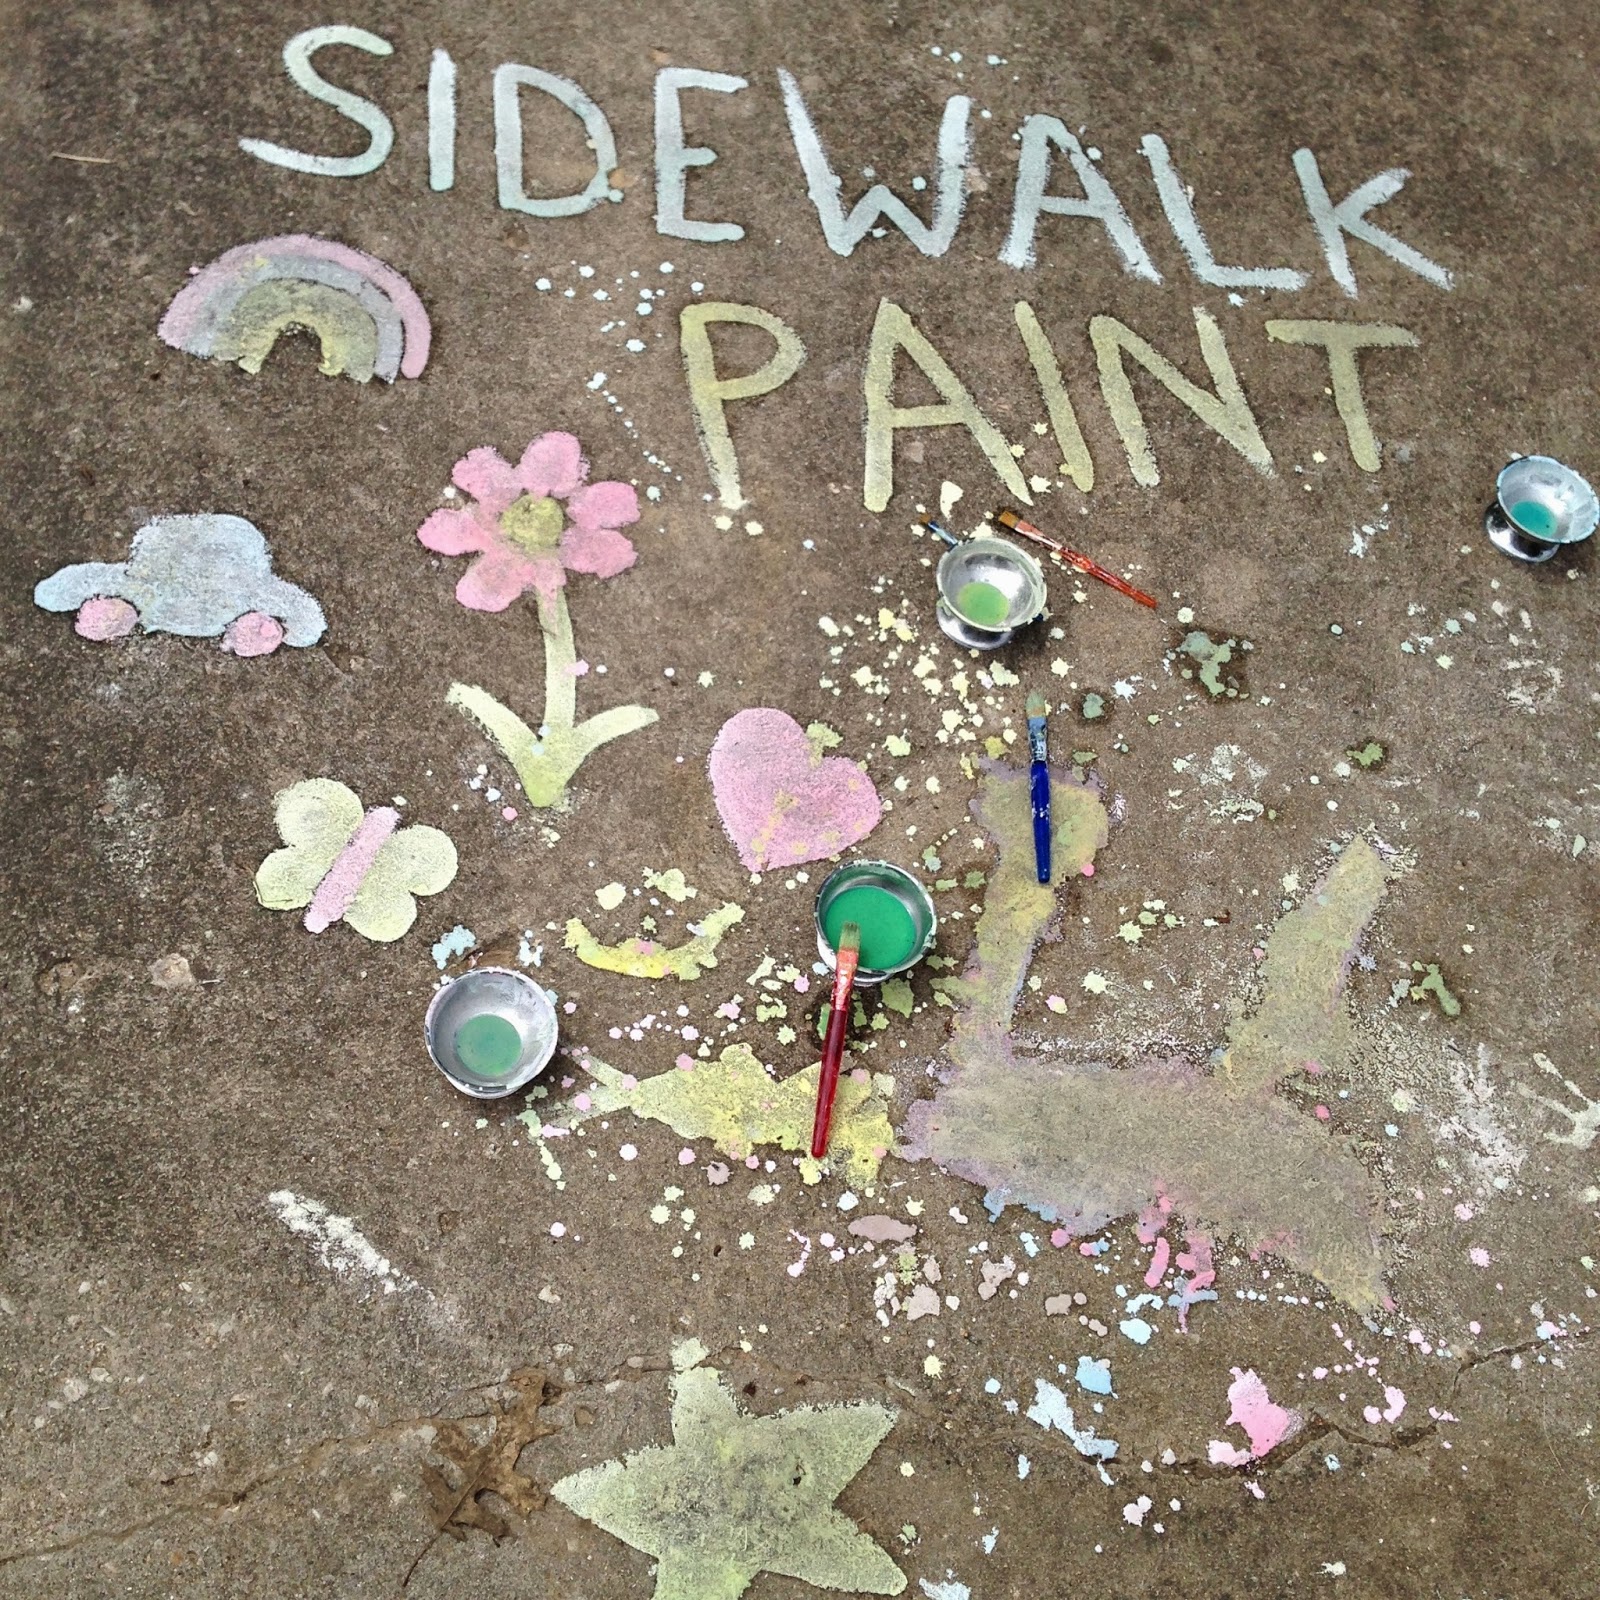 Sidewalk paint @ whatilivefor.net